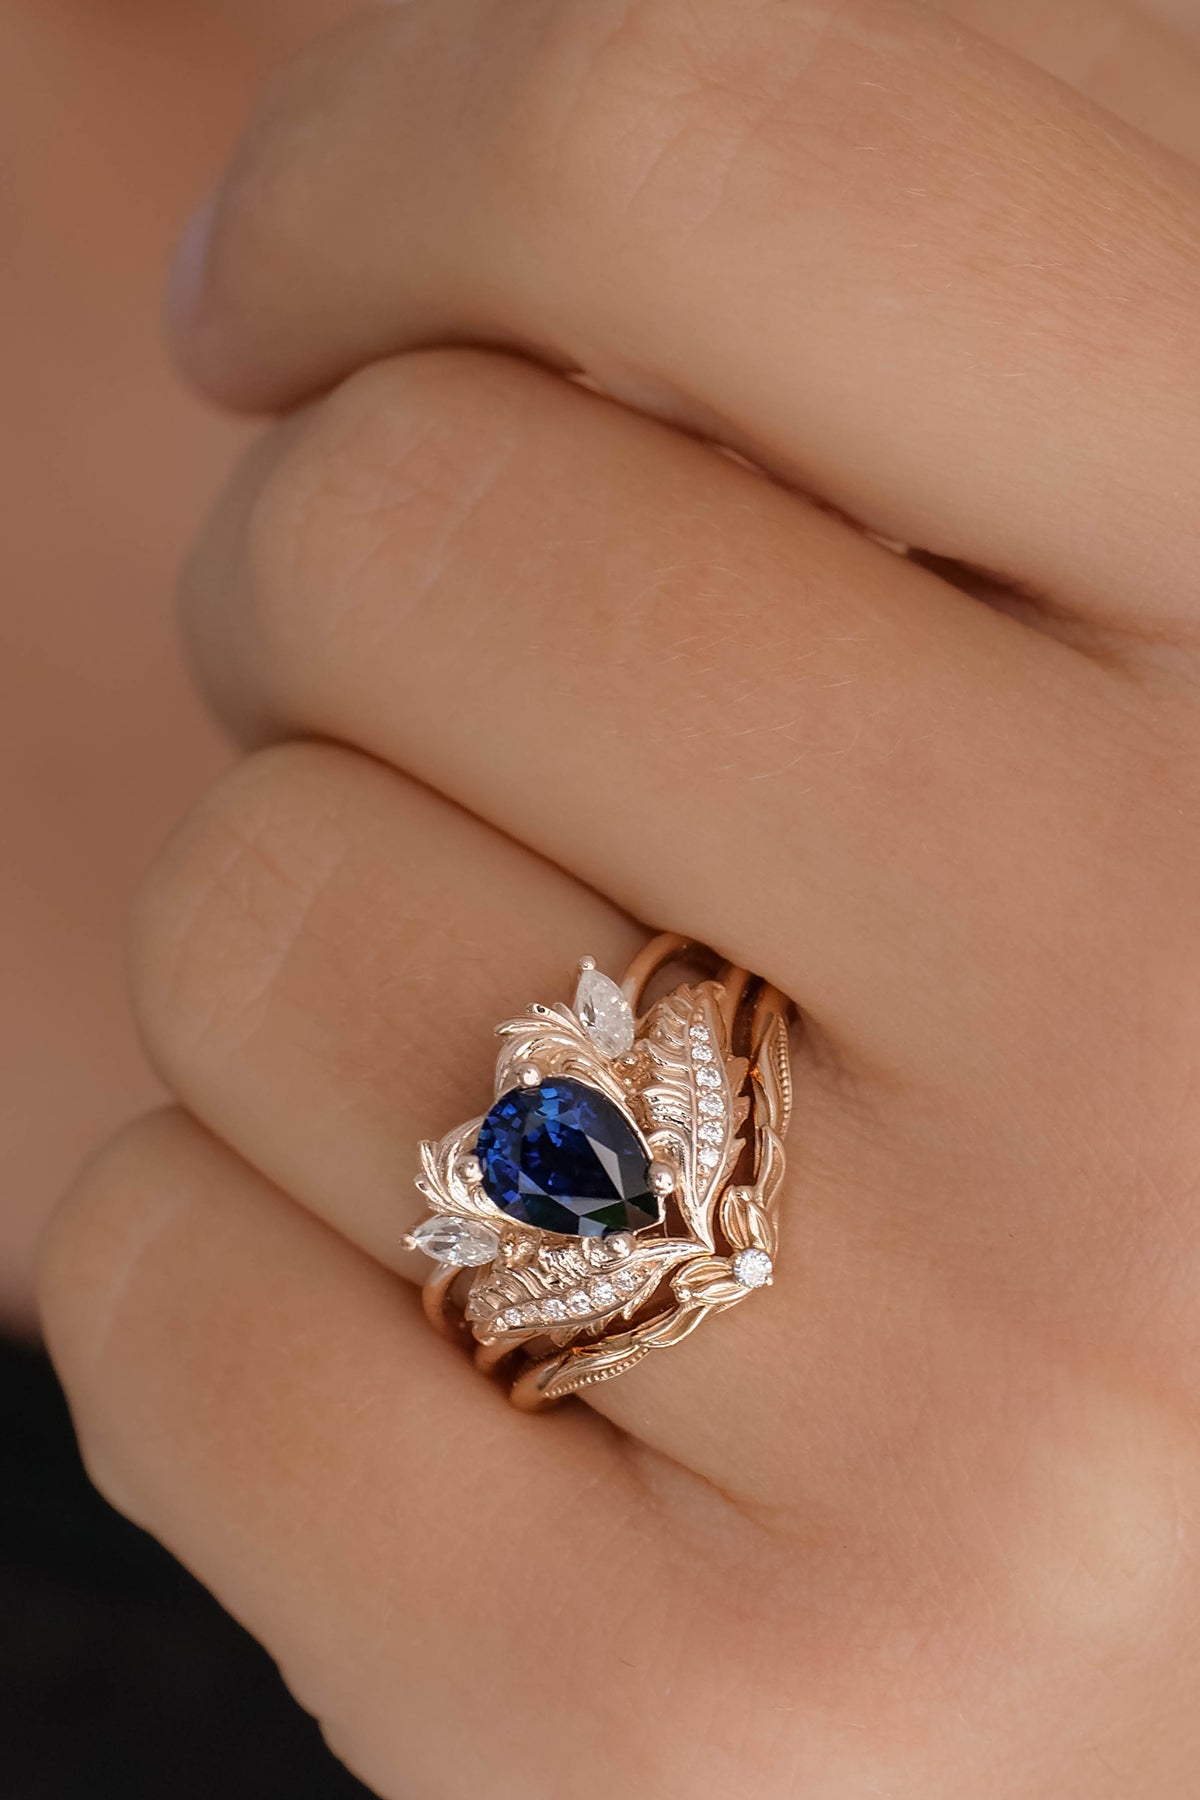 blue diamond wedding ring sets